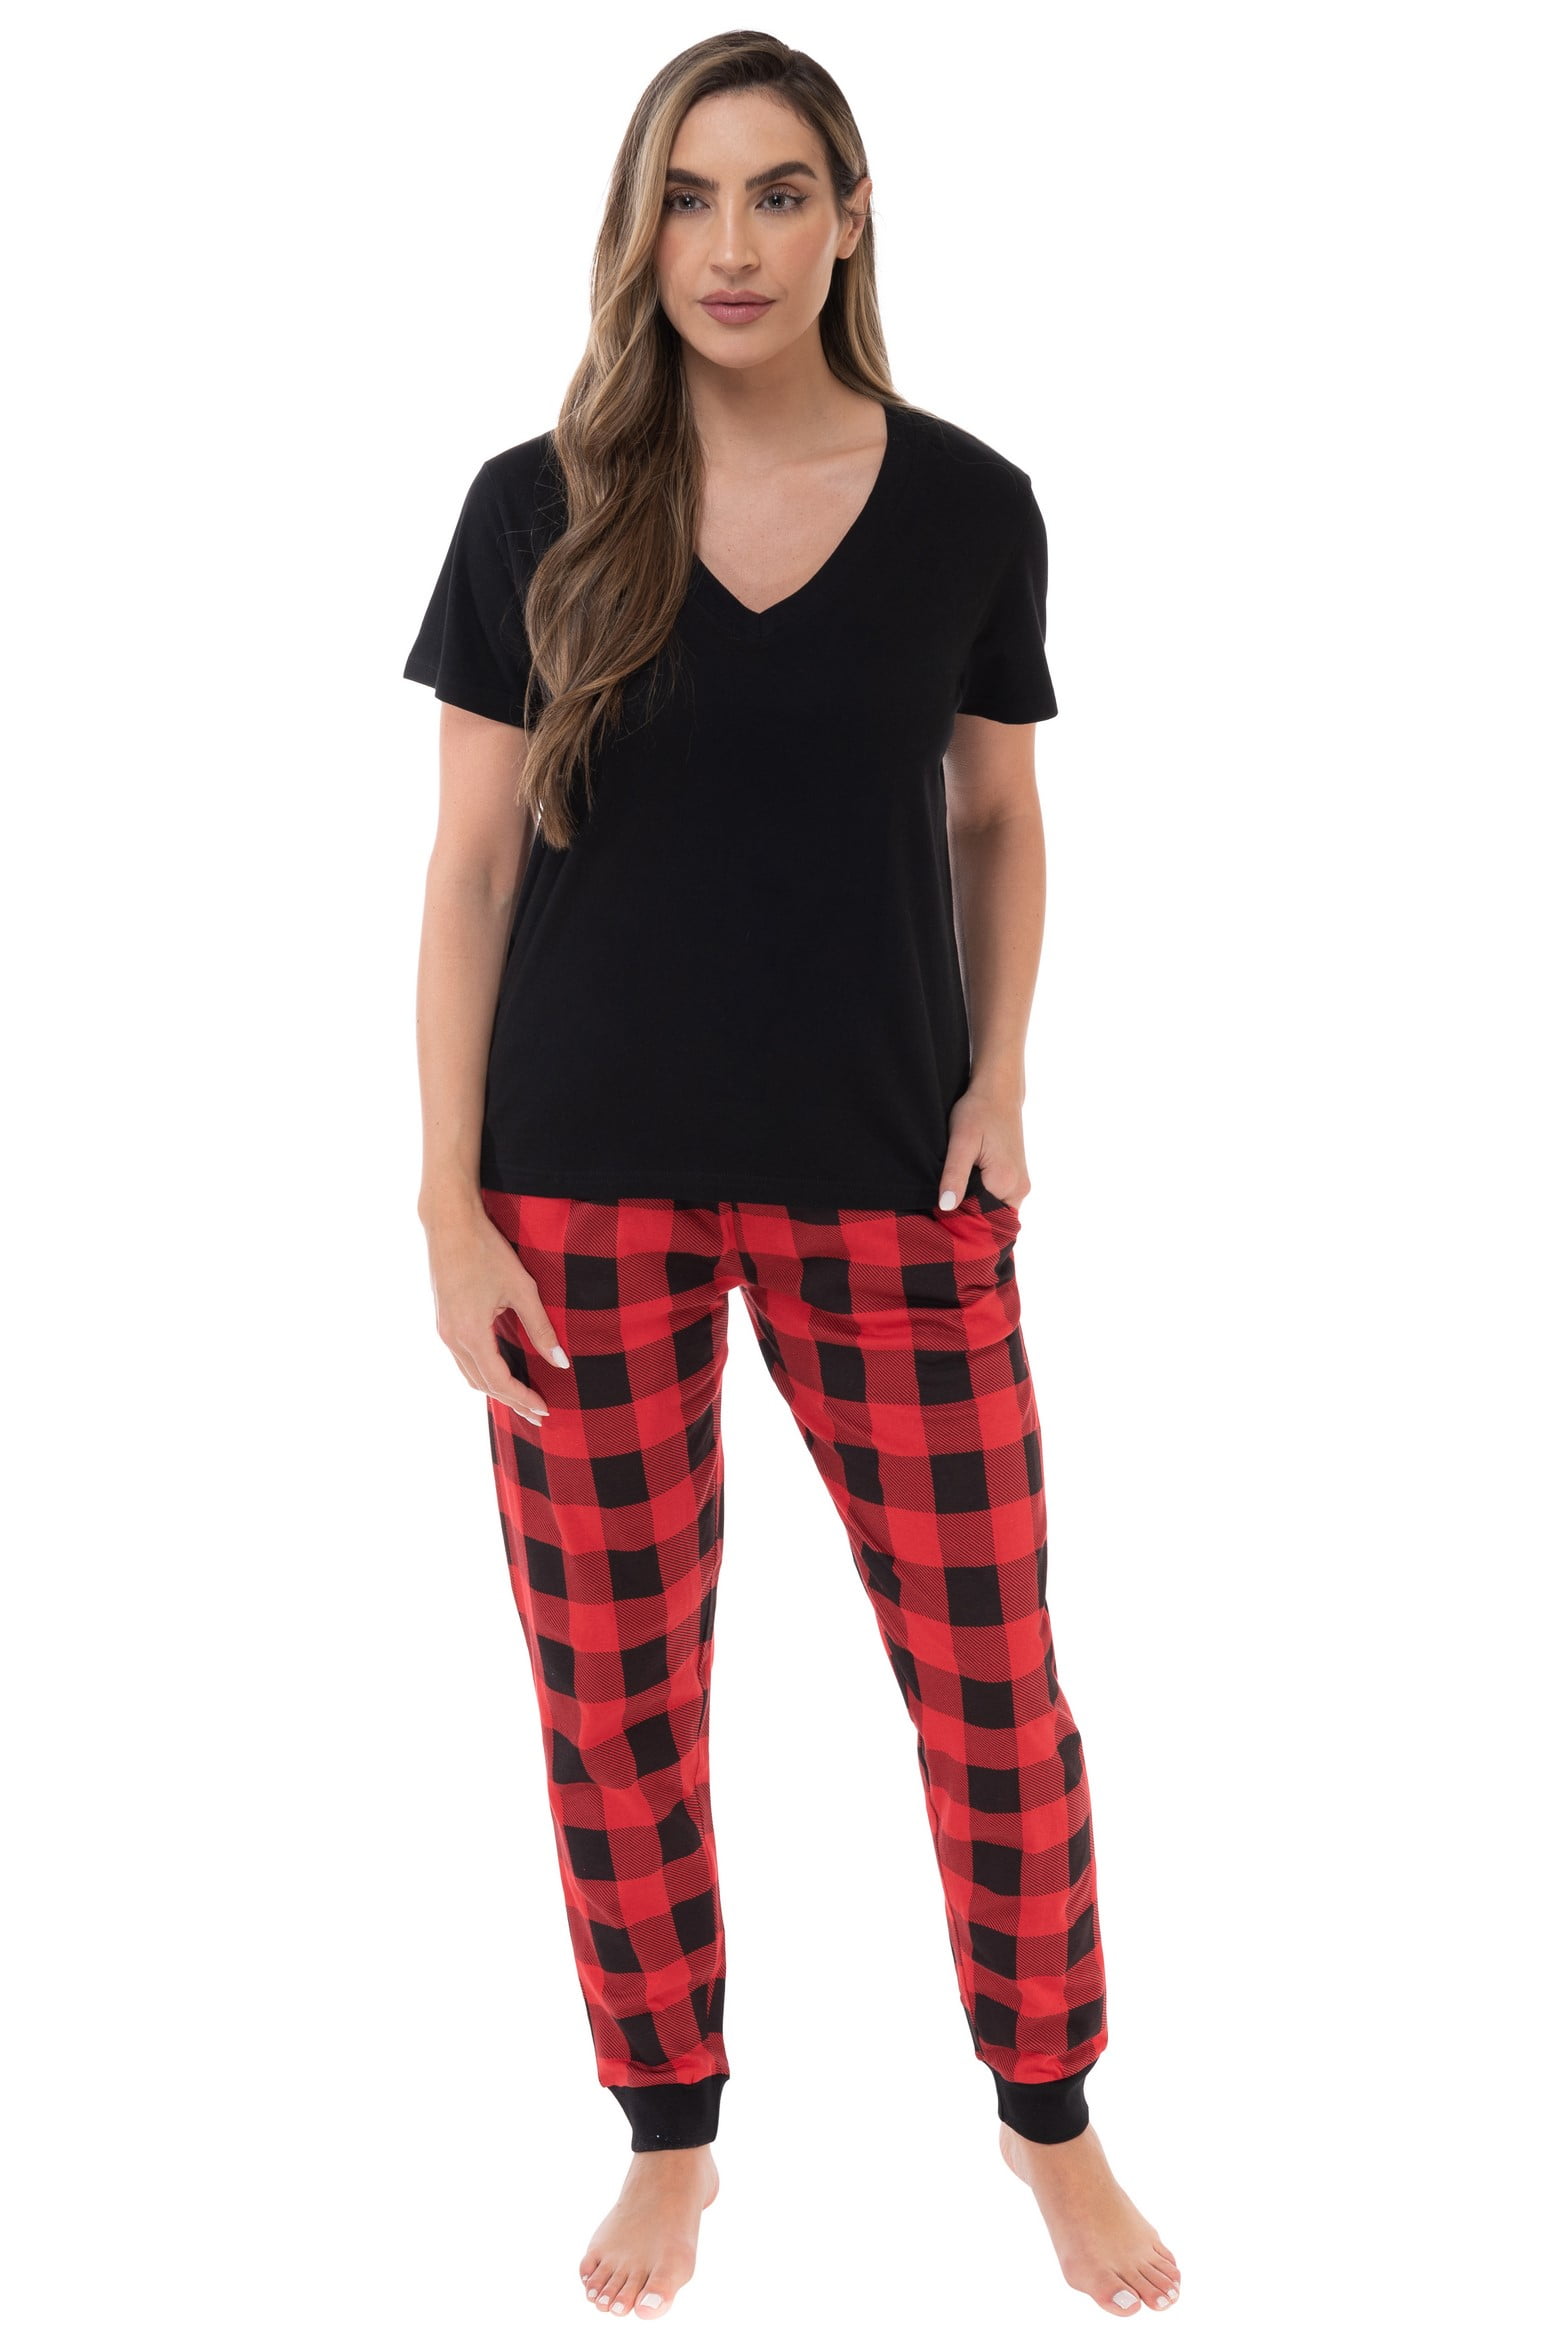 Just Love Women Sleepwear Jogger Sets Woman Pajamas (Buffalo Plaid - Red  Black, Medium)